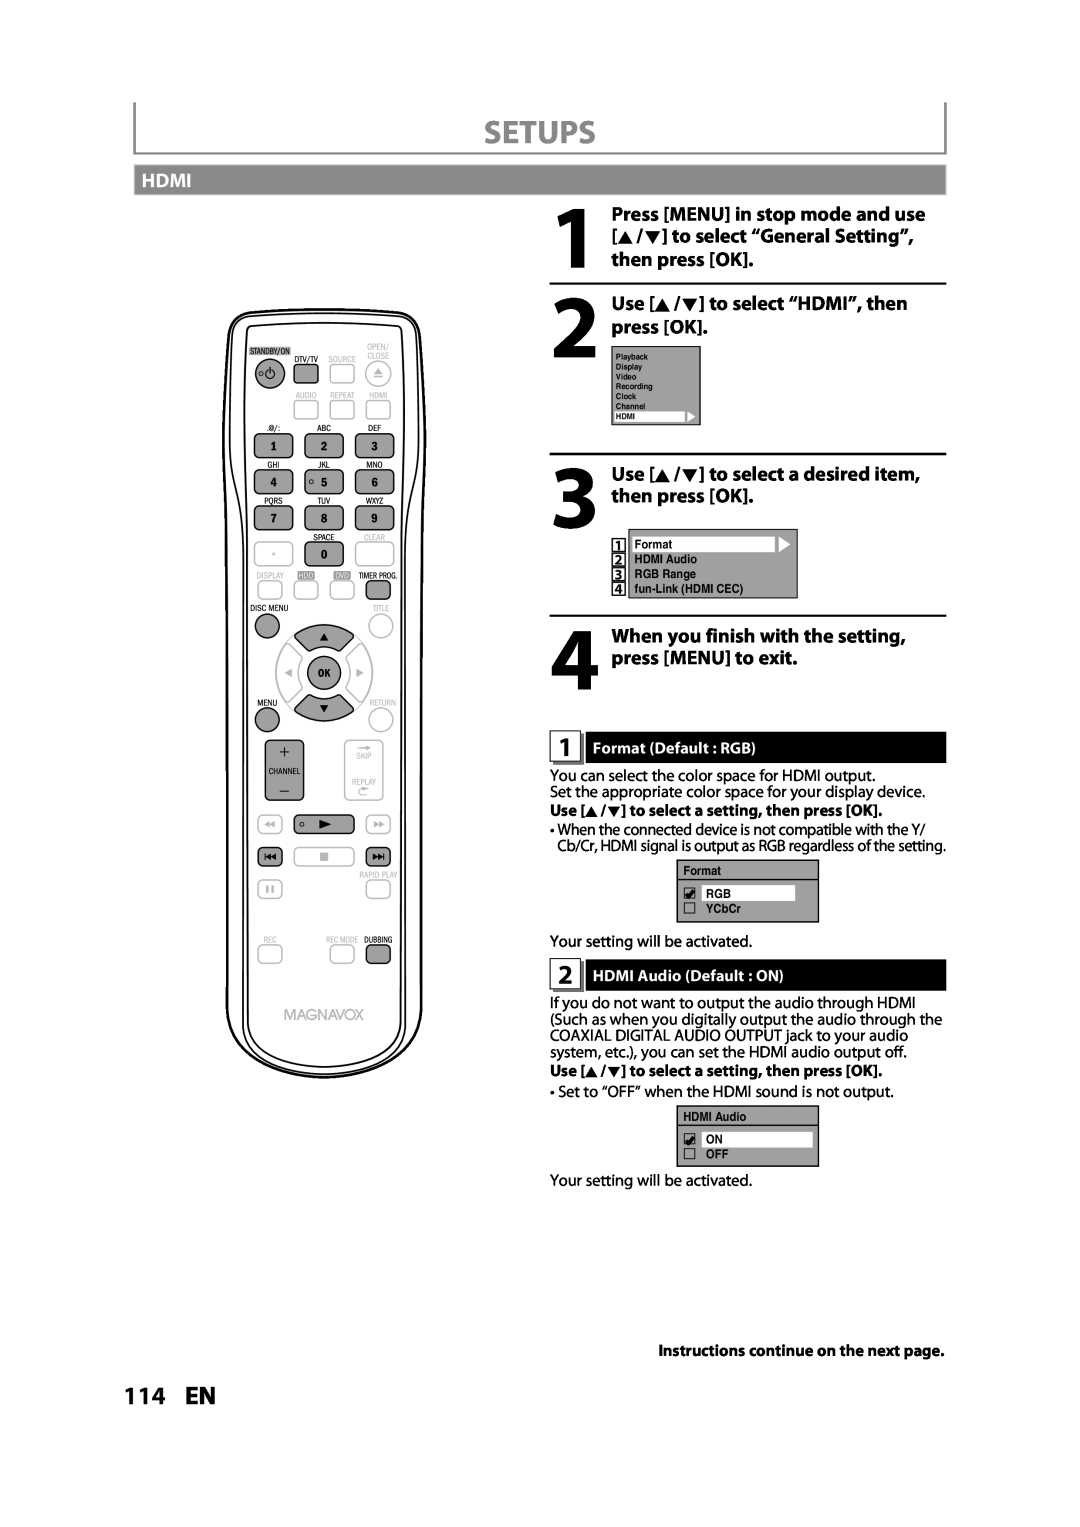 Magnavox MDR533H 114 EN, Hdmi, K / L to select “General Setting”, Use K / L to select “HDMI”, then, Setups, then press OK 